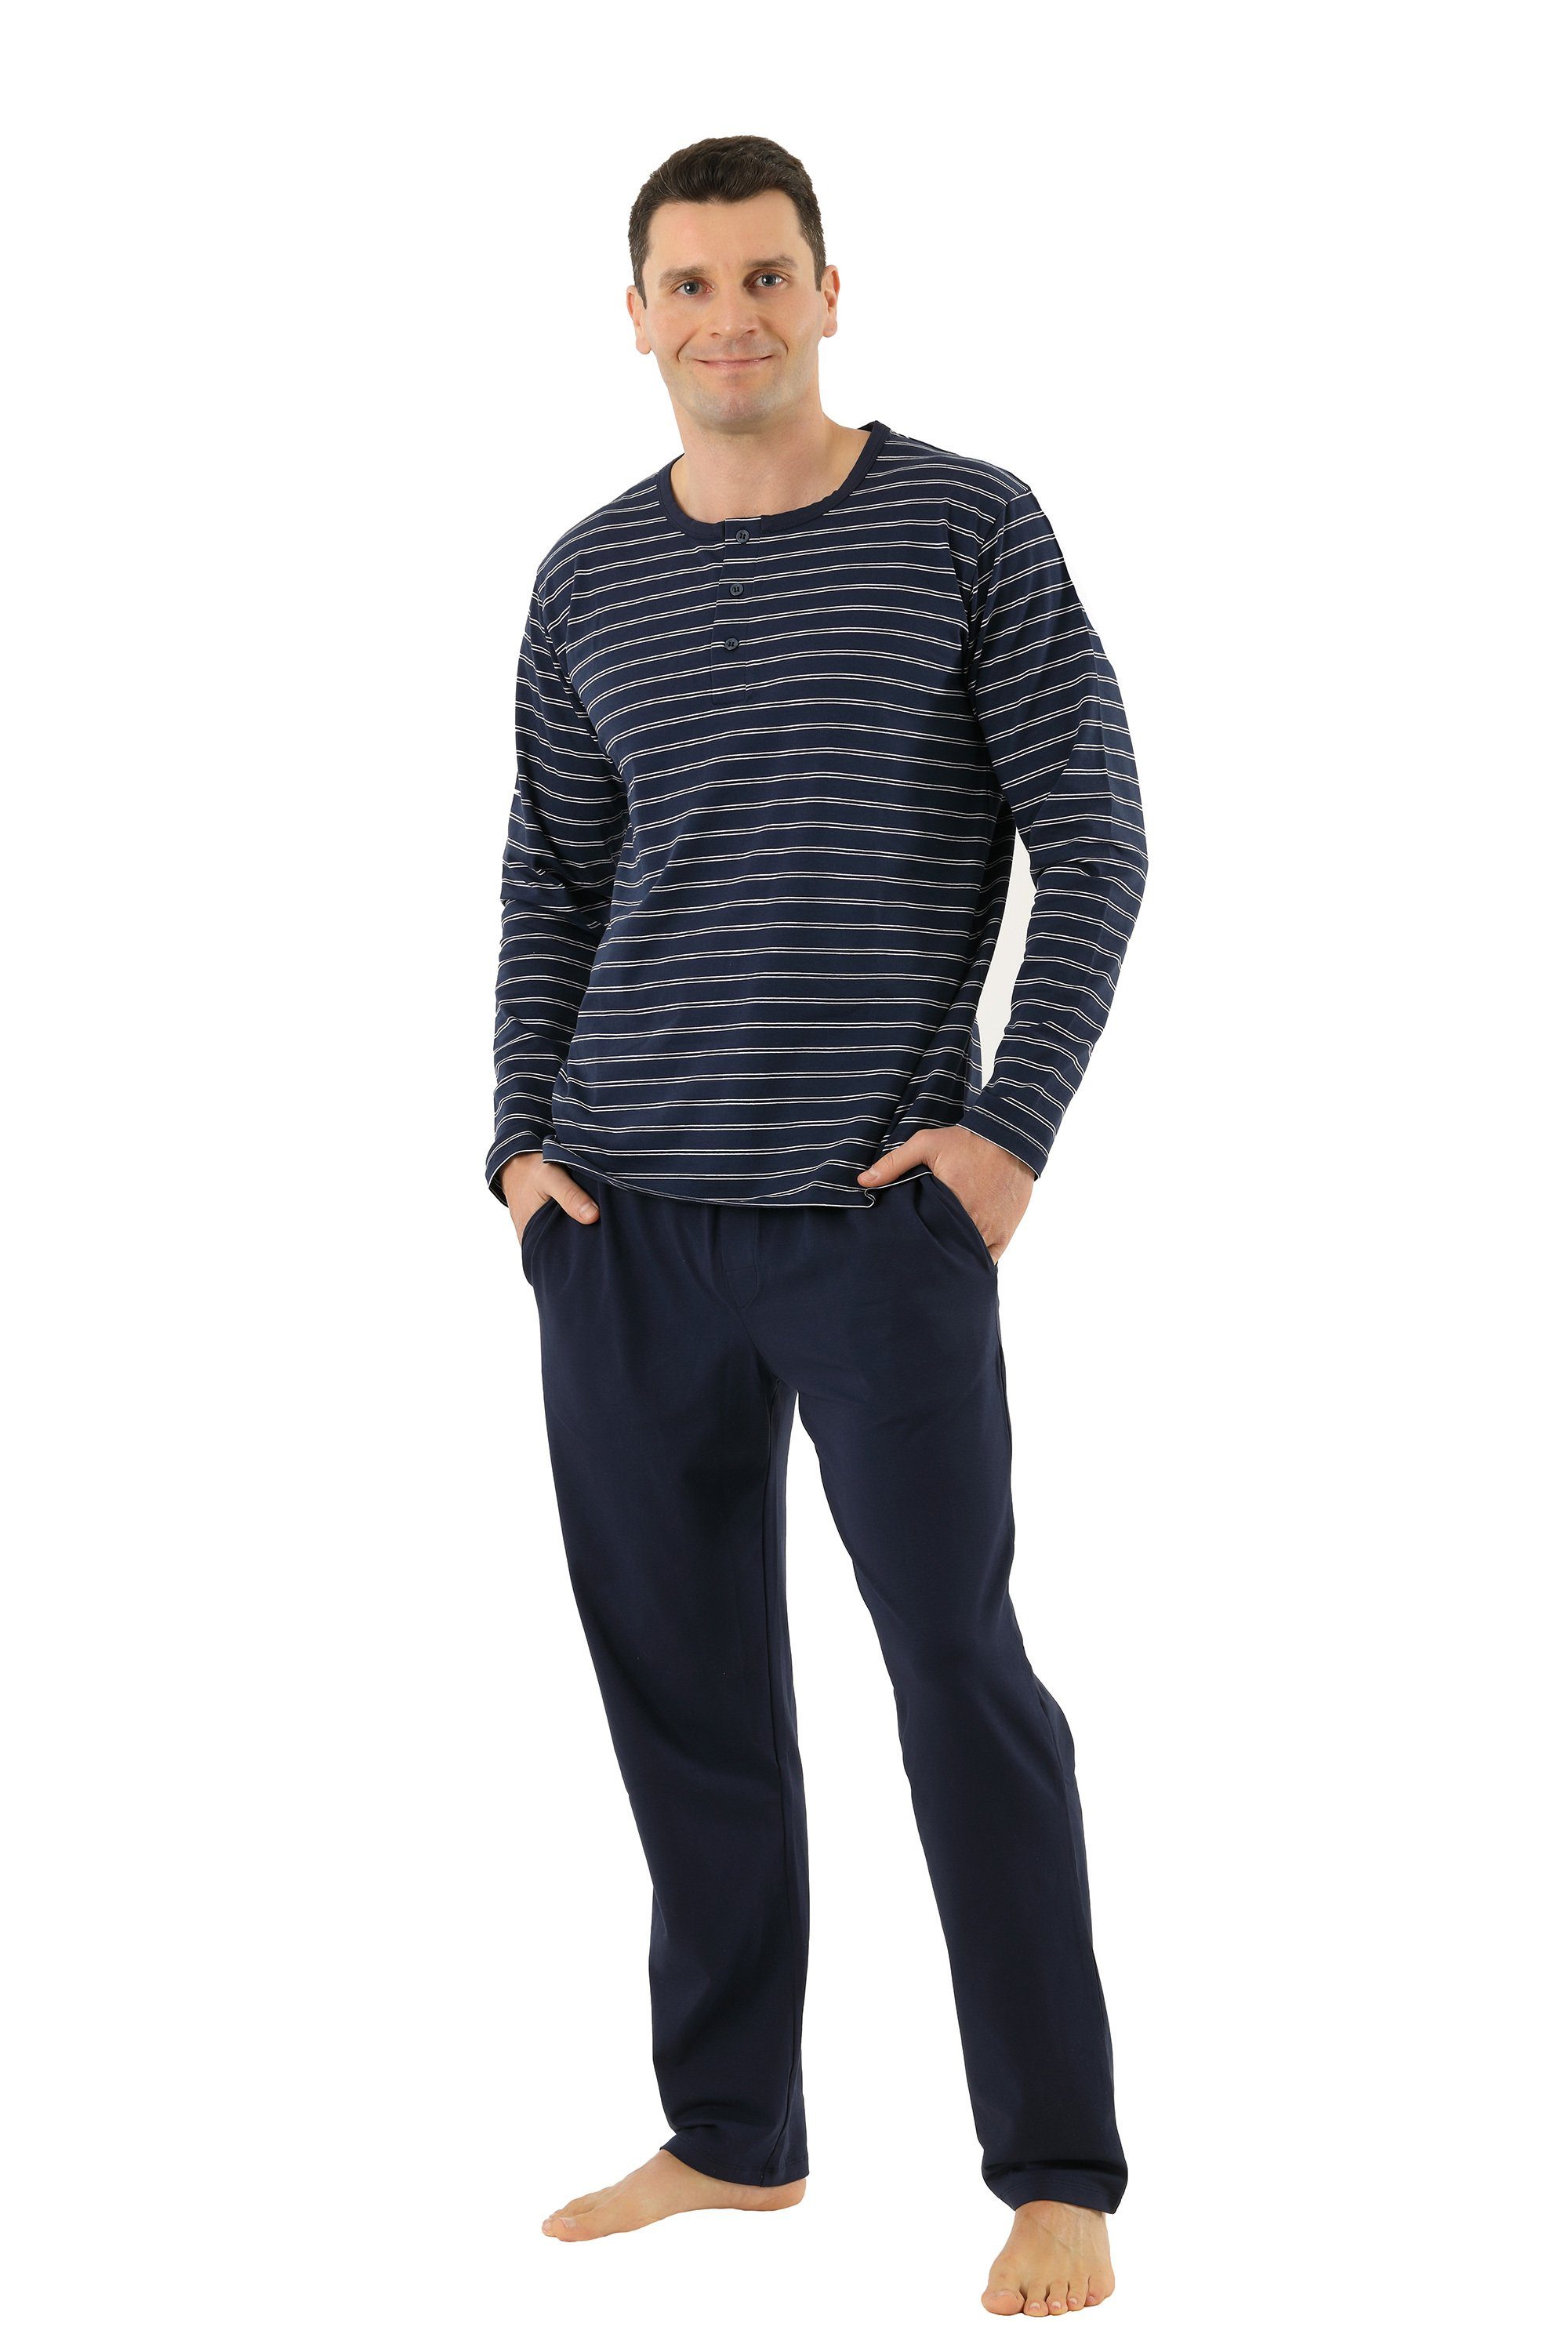 Albert Kreuz Schlafanzug Pyjama lang atmungsaktiv (1 Set bestehend aus Oberteil und Hose)